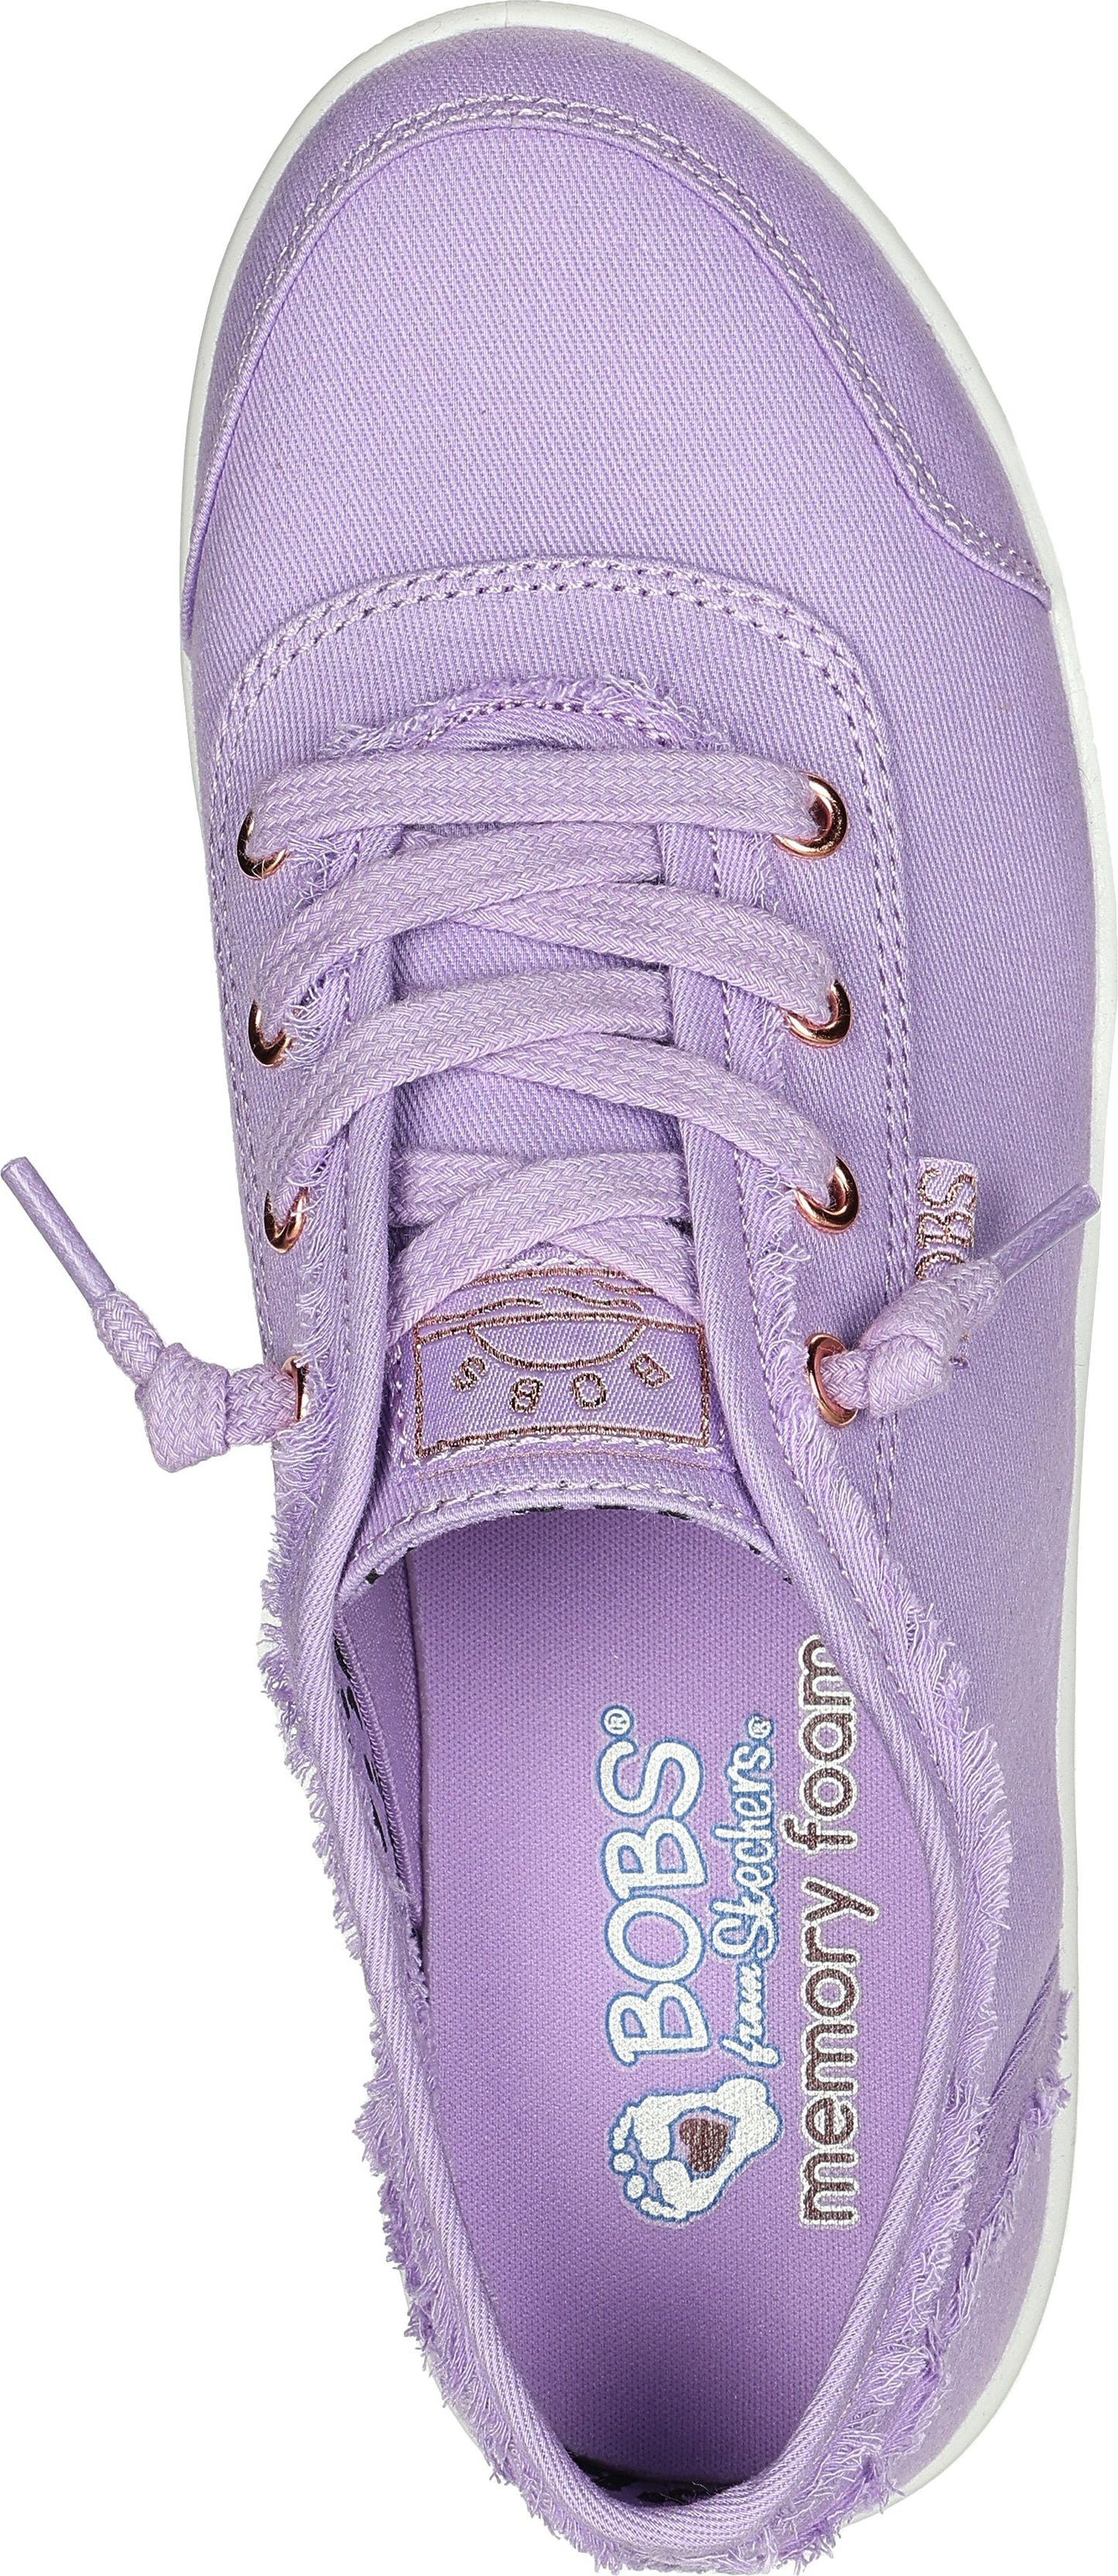 Skechers Shoes Bobs B Cute Lilac